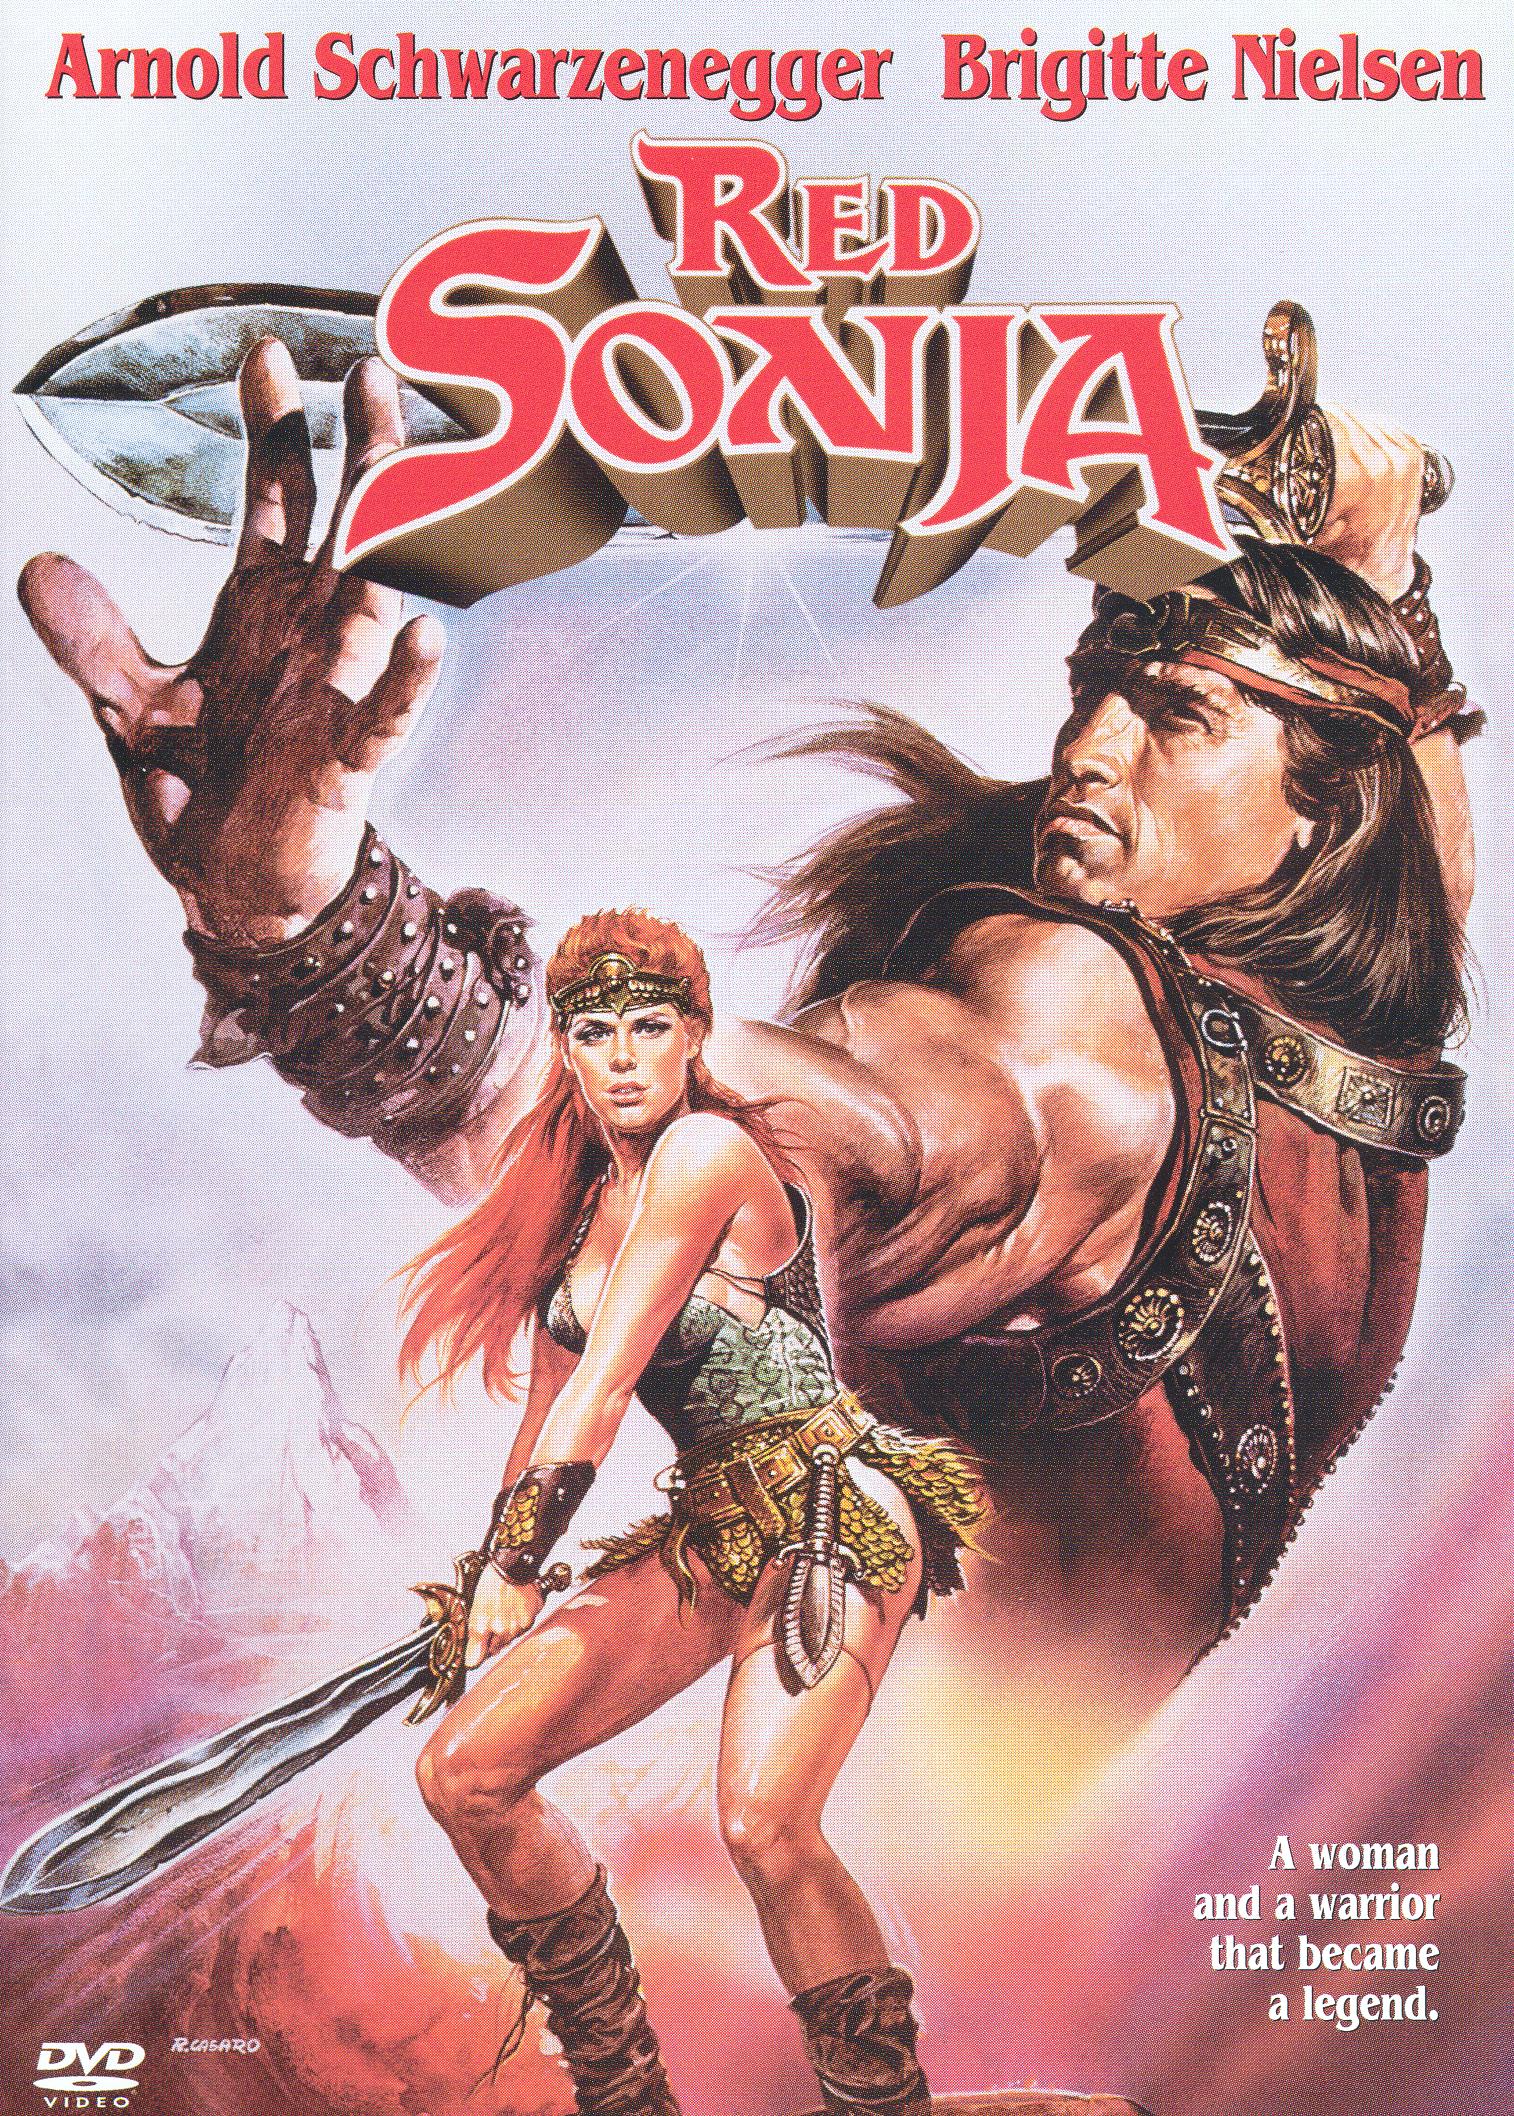 Red Sonja cover art